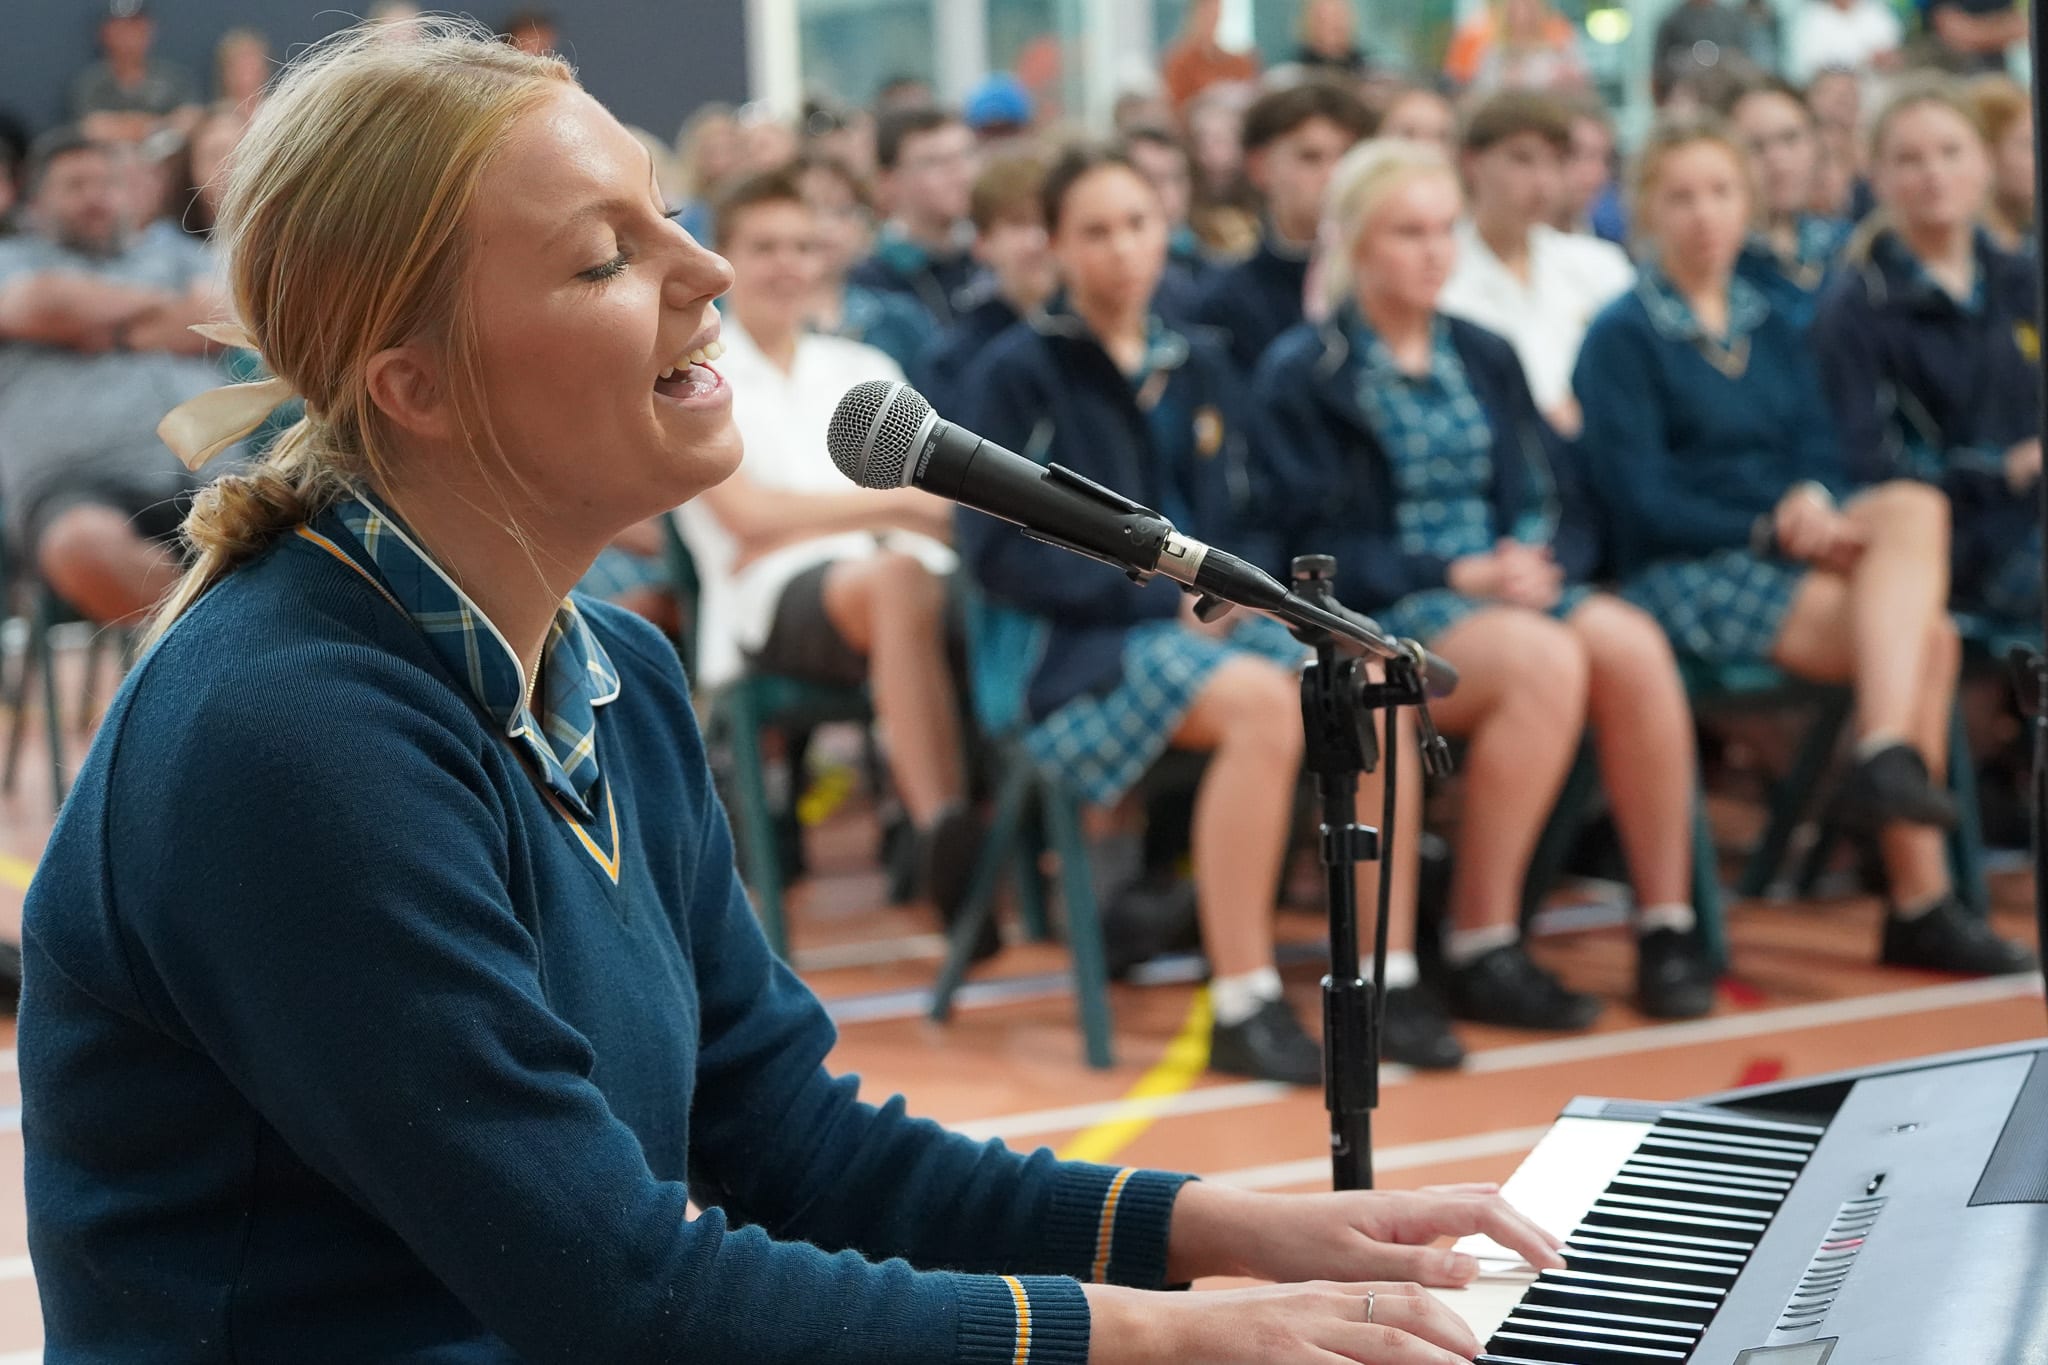 Student playing keyboard and singing at liturgy